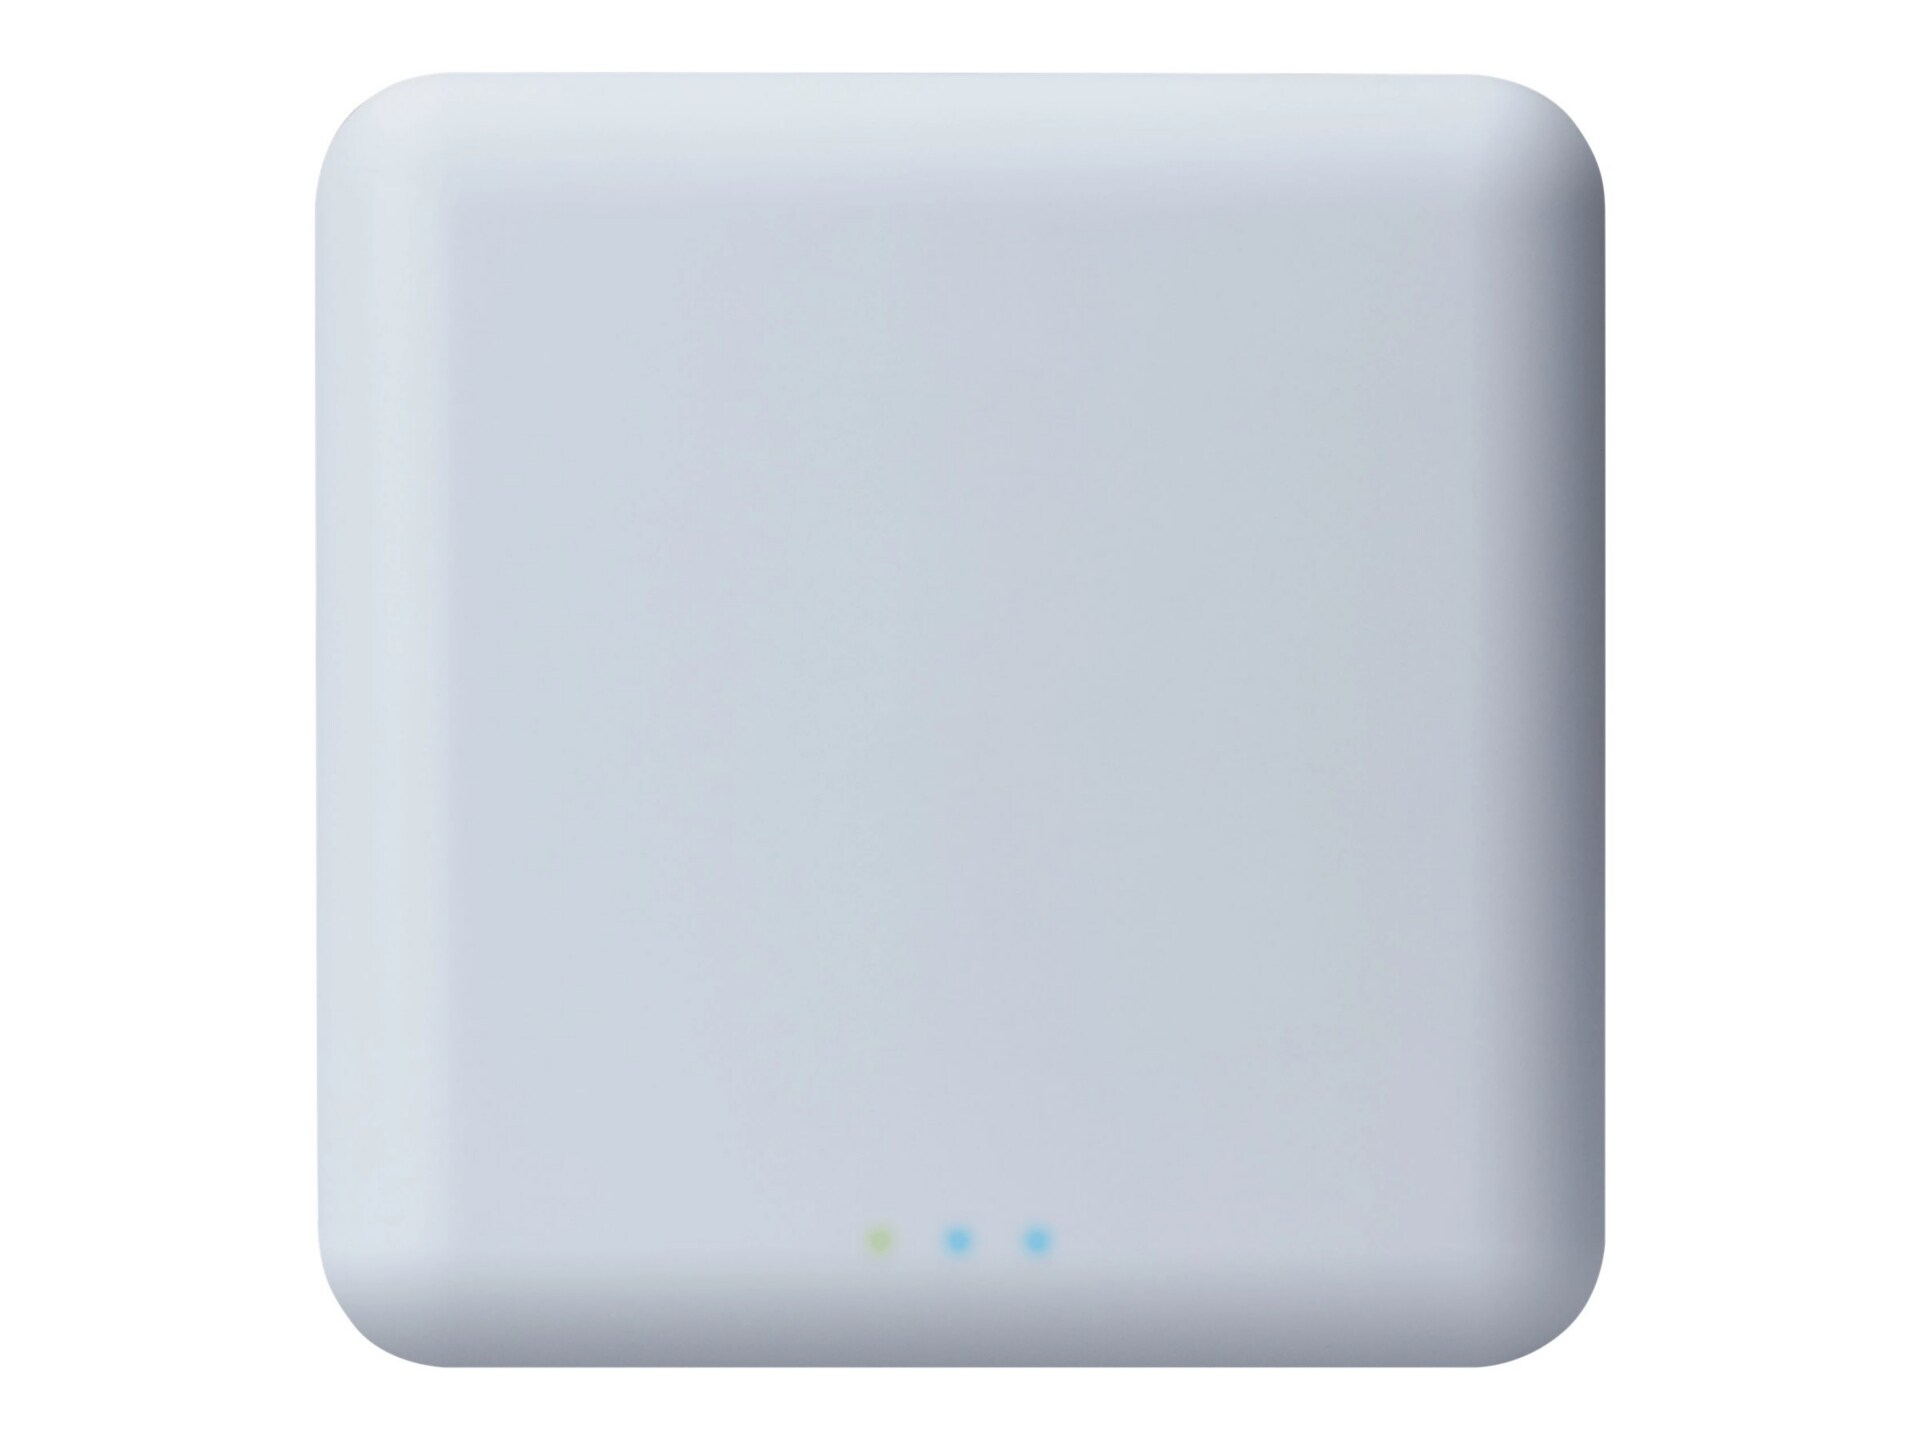 Luxul Apex Series XAP-1510 - wireless access point - Wi-Fi 5, Wi-Fi 5